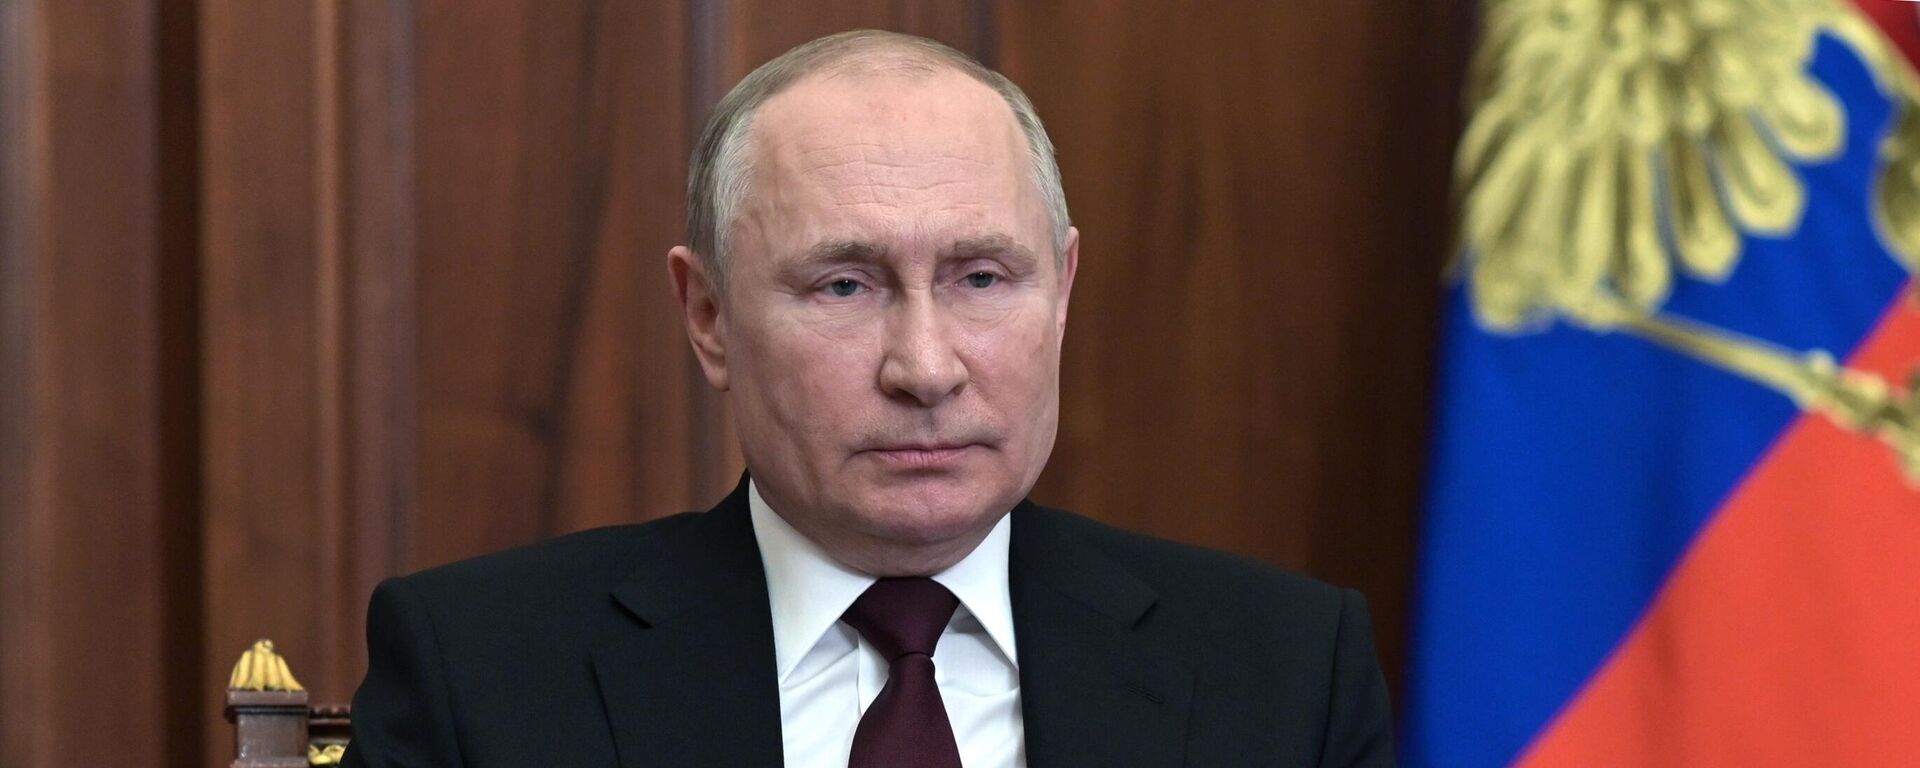 Rusijos prezidentas Vladimiras Putinas - Sputnik Lietuva, 1920, 22.02.2022